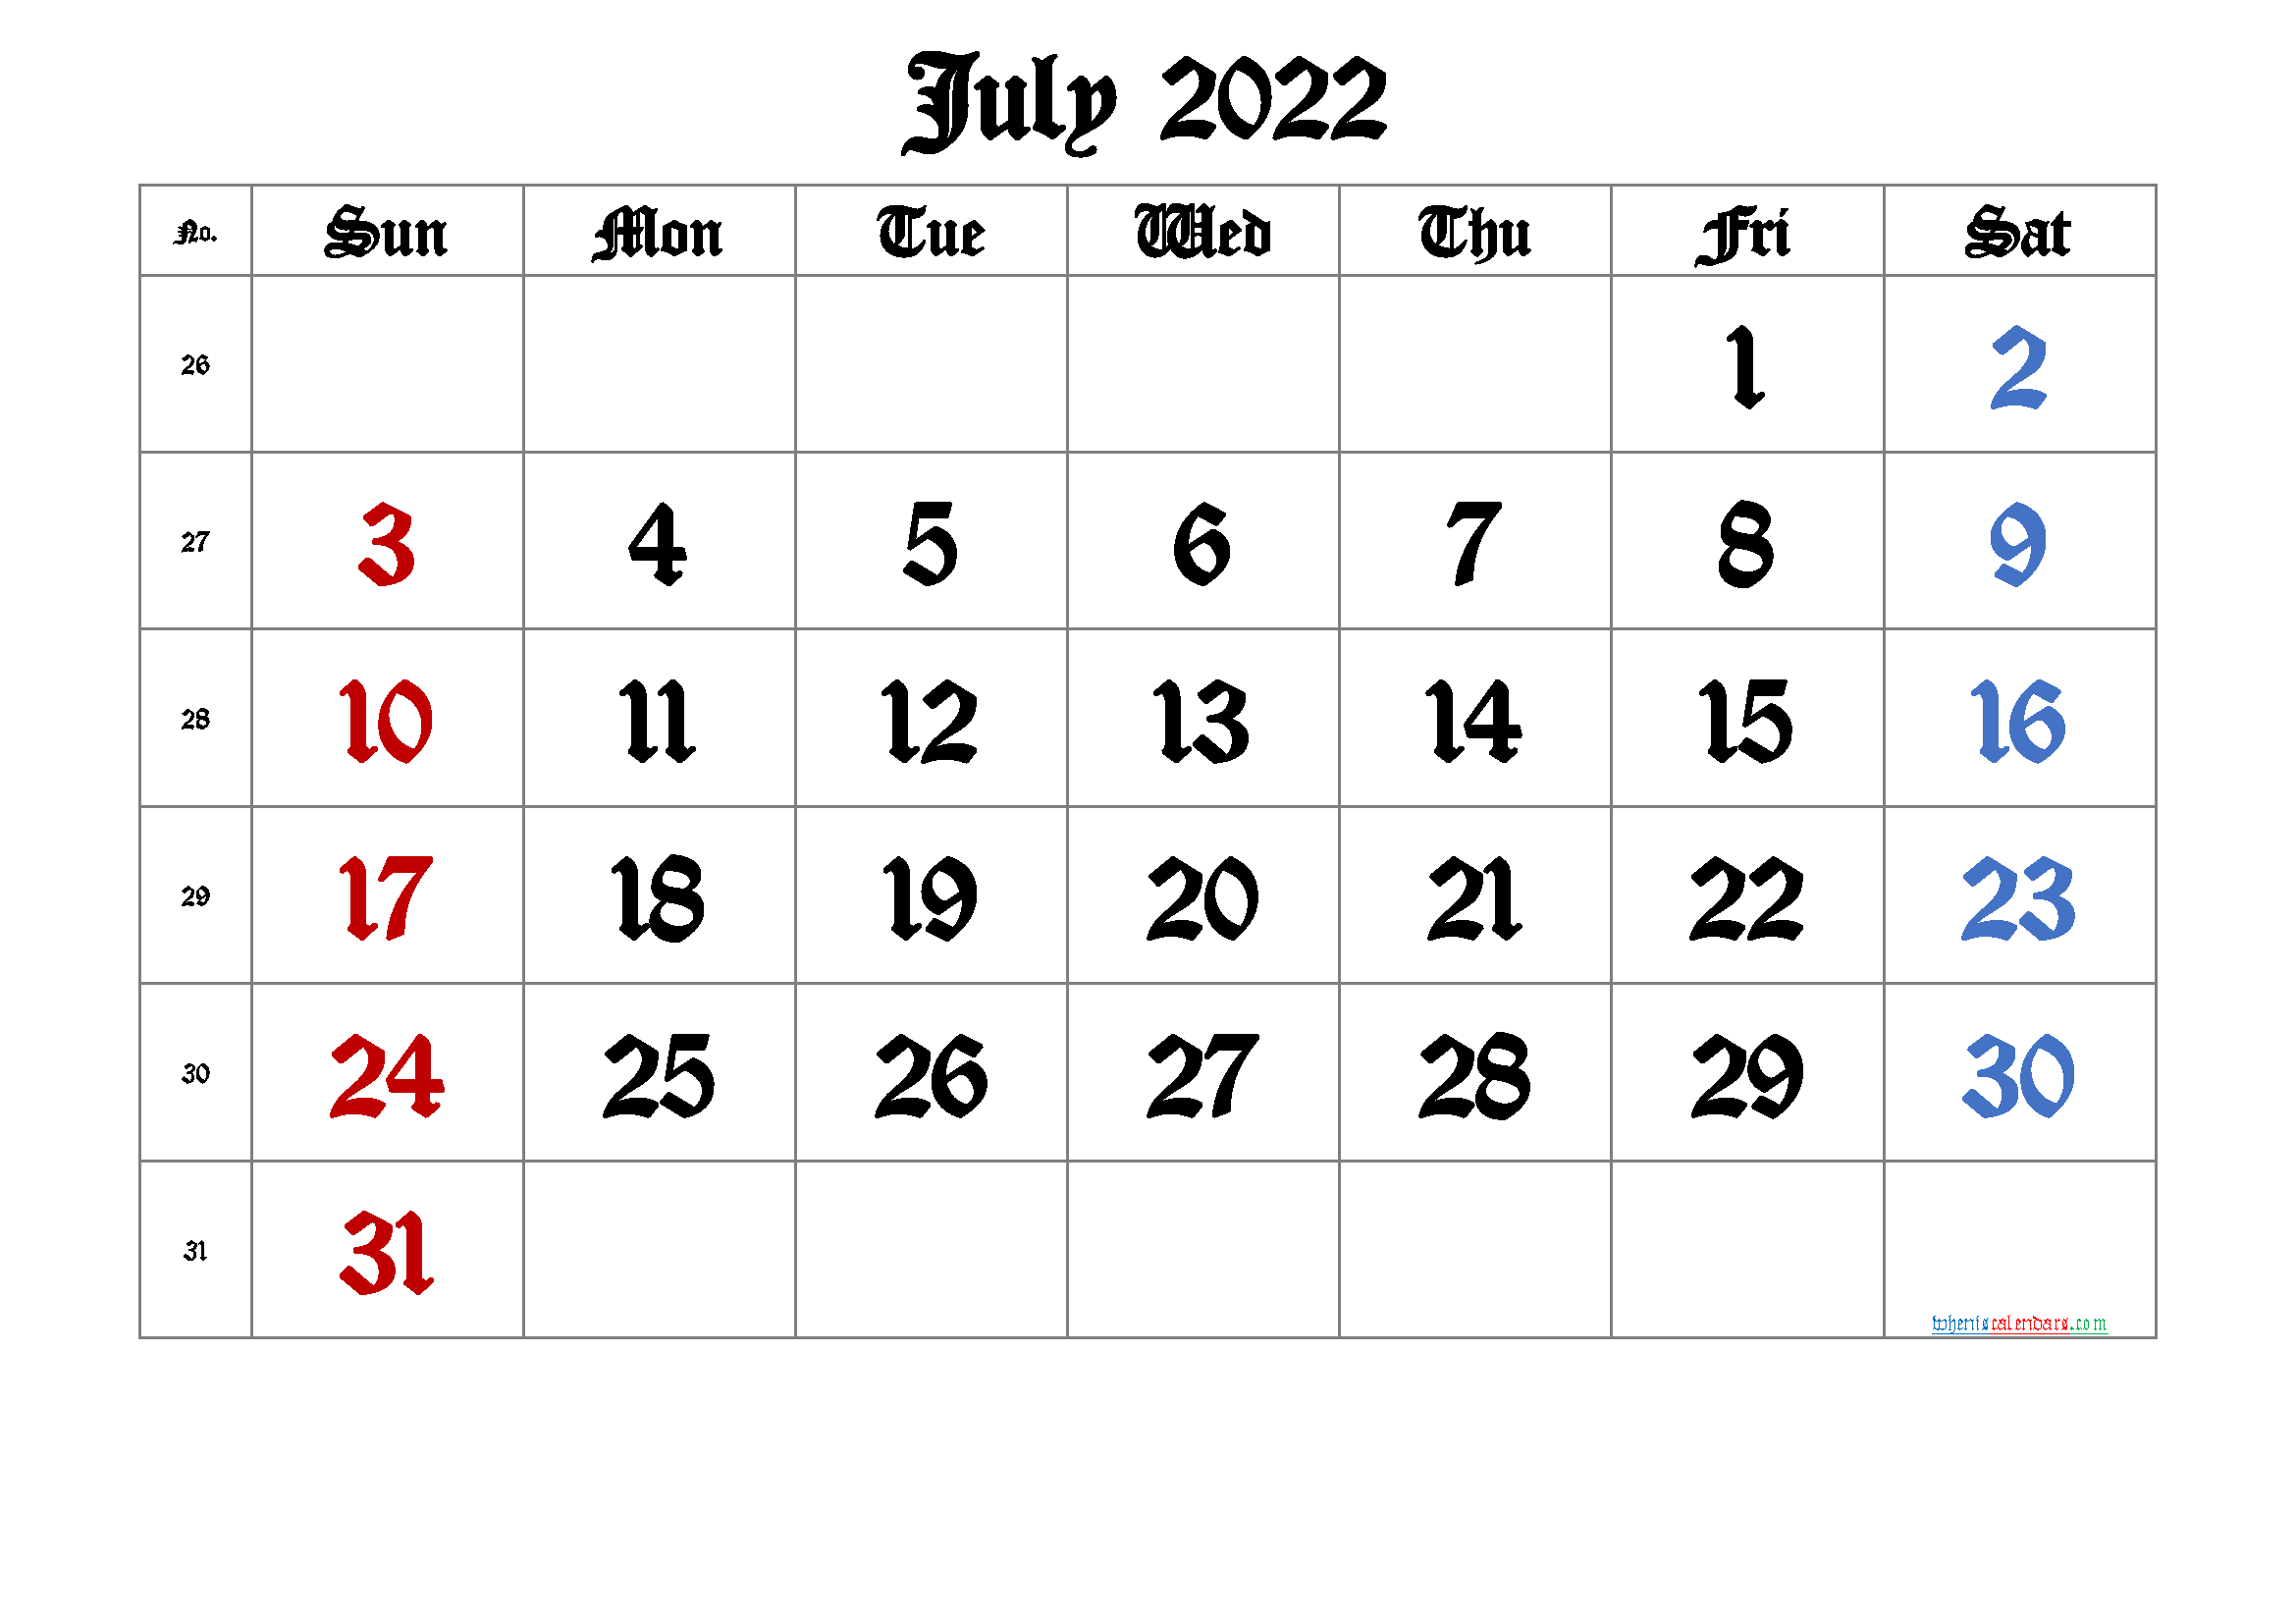 Catch Calendar For July 2022